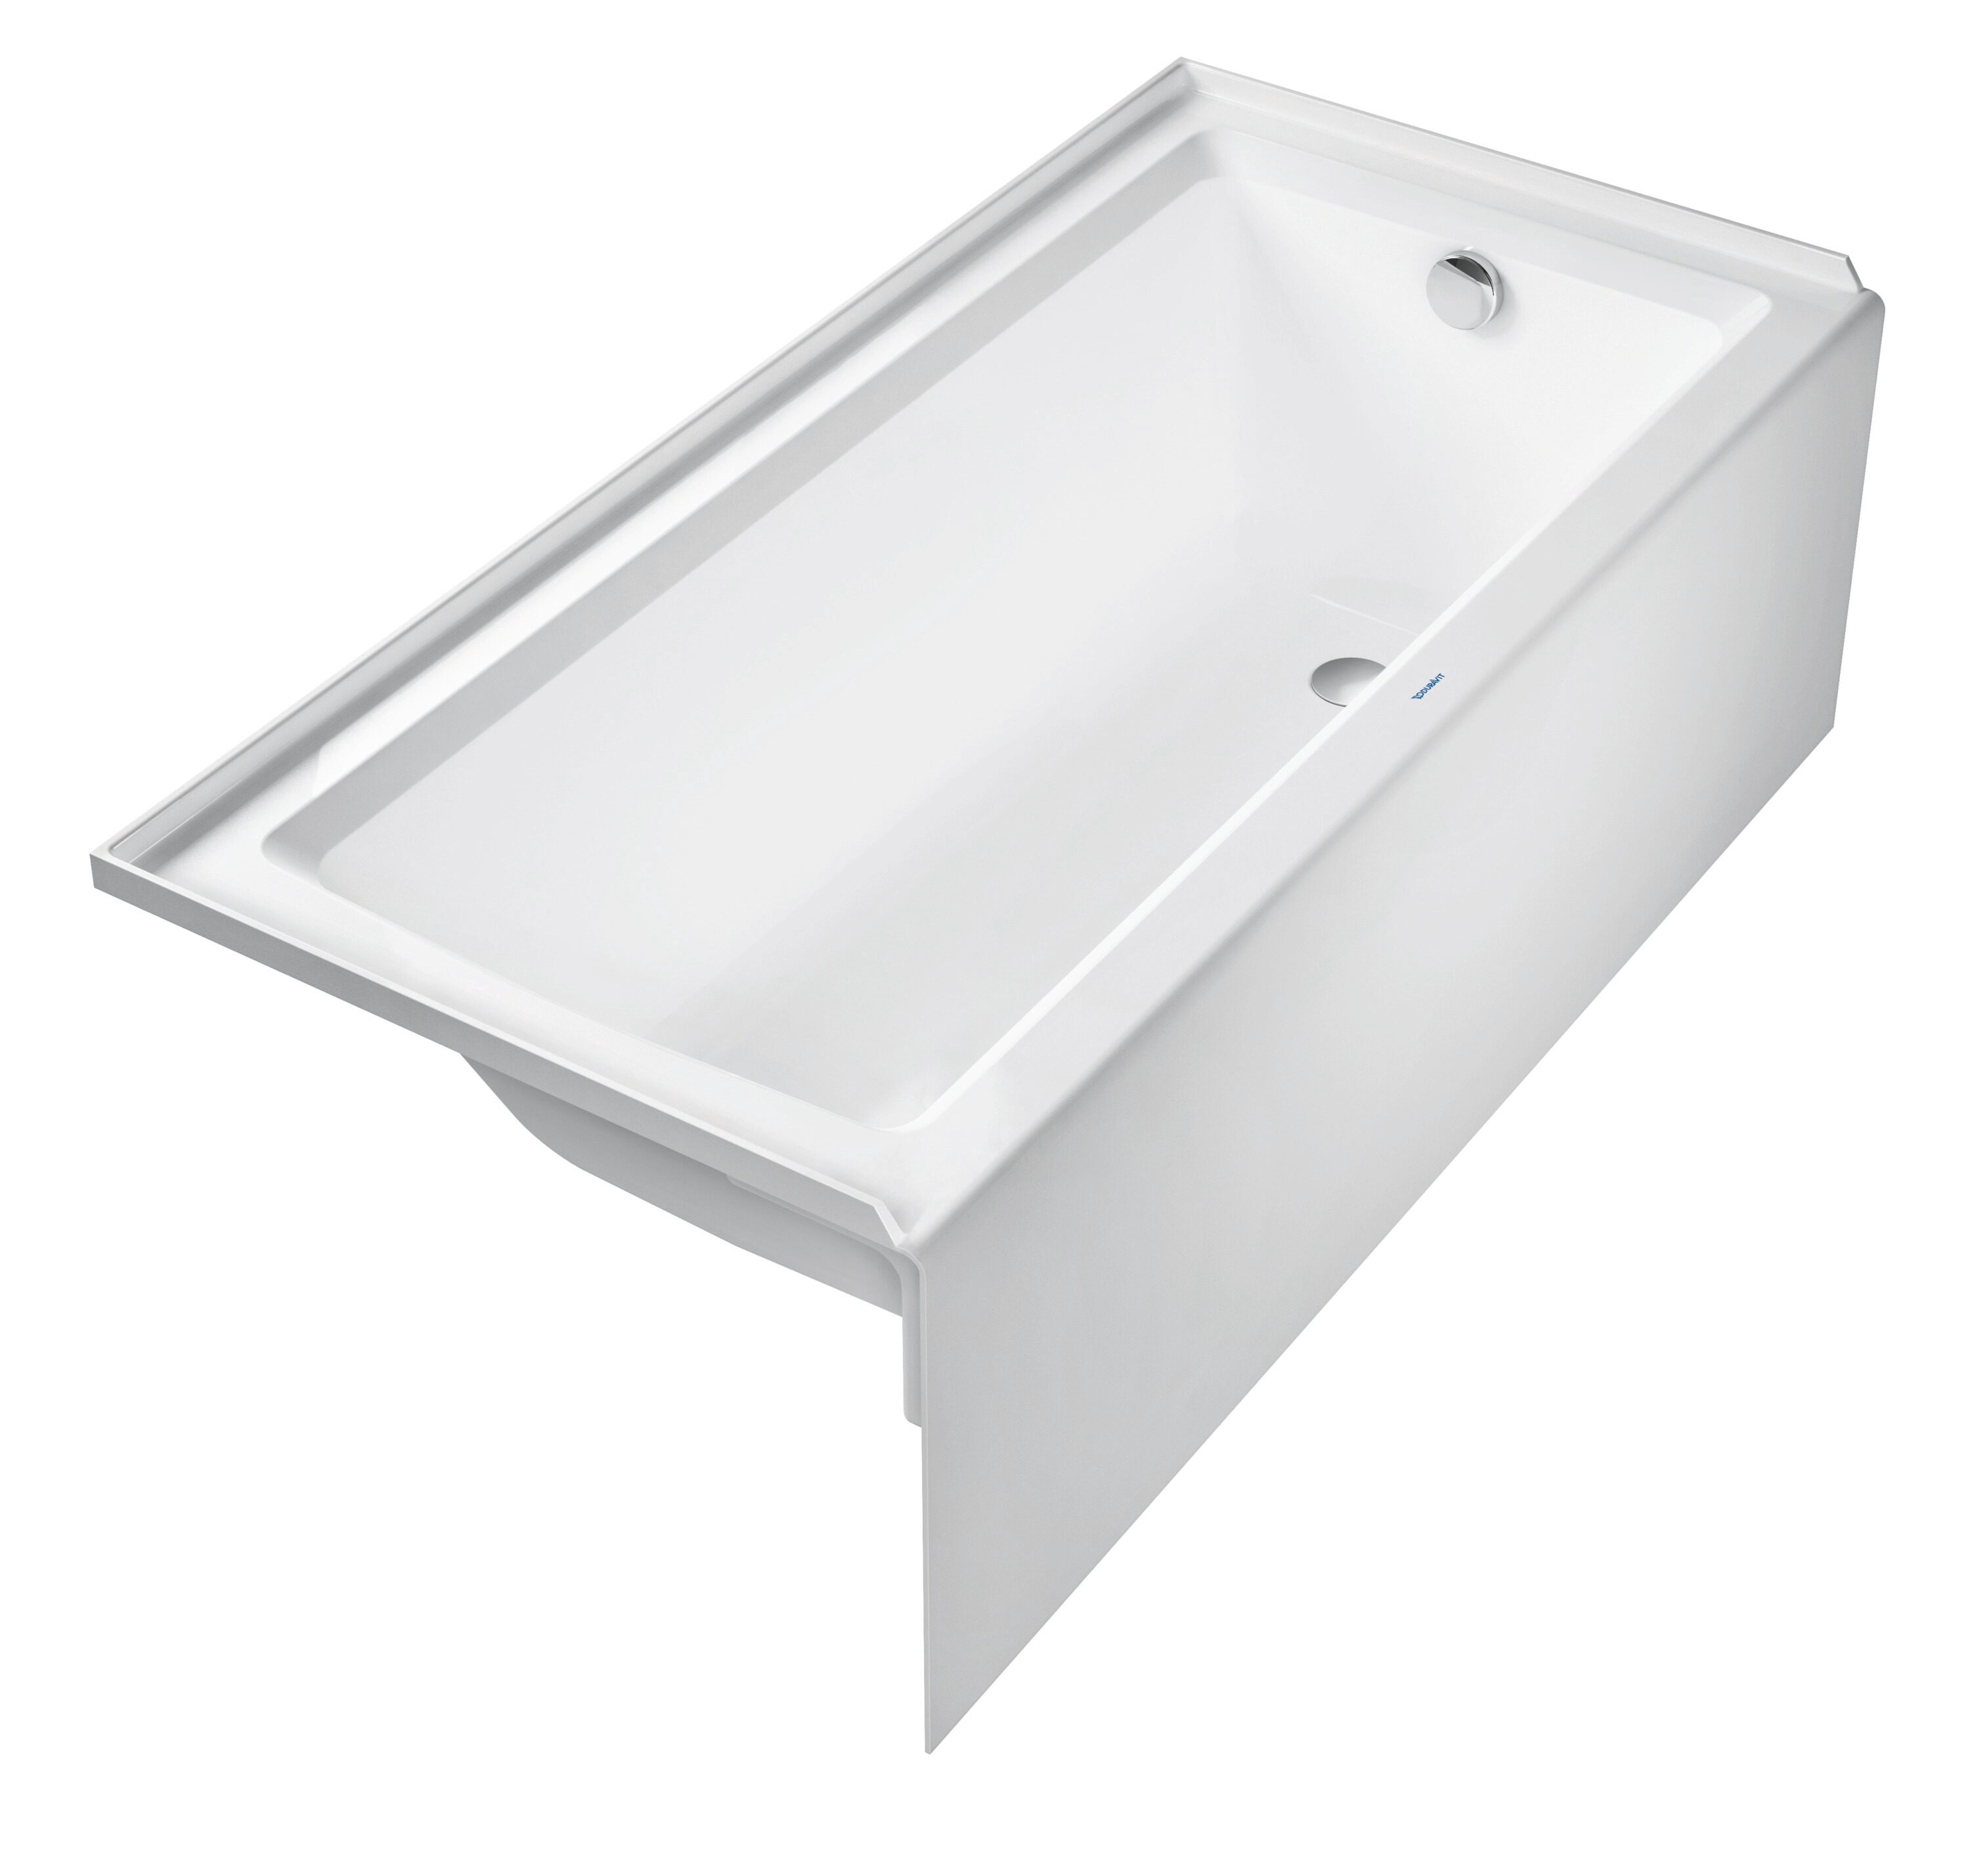 Duravit Architec 32-in W x 66-in L White Acrylic Right Drain Alcove Soaking Bathtub in the Bathtubs department at